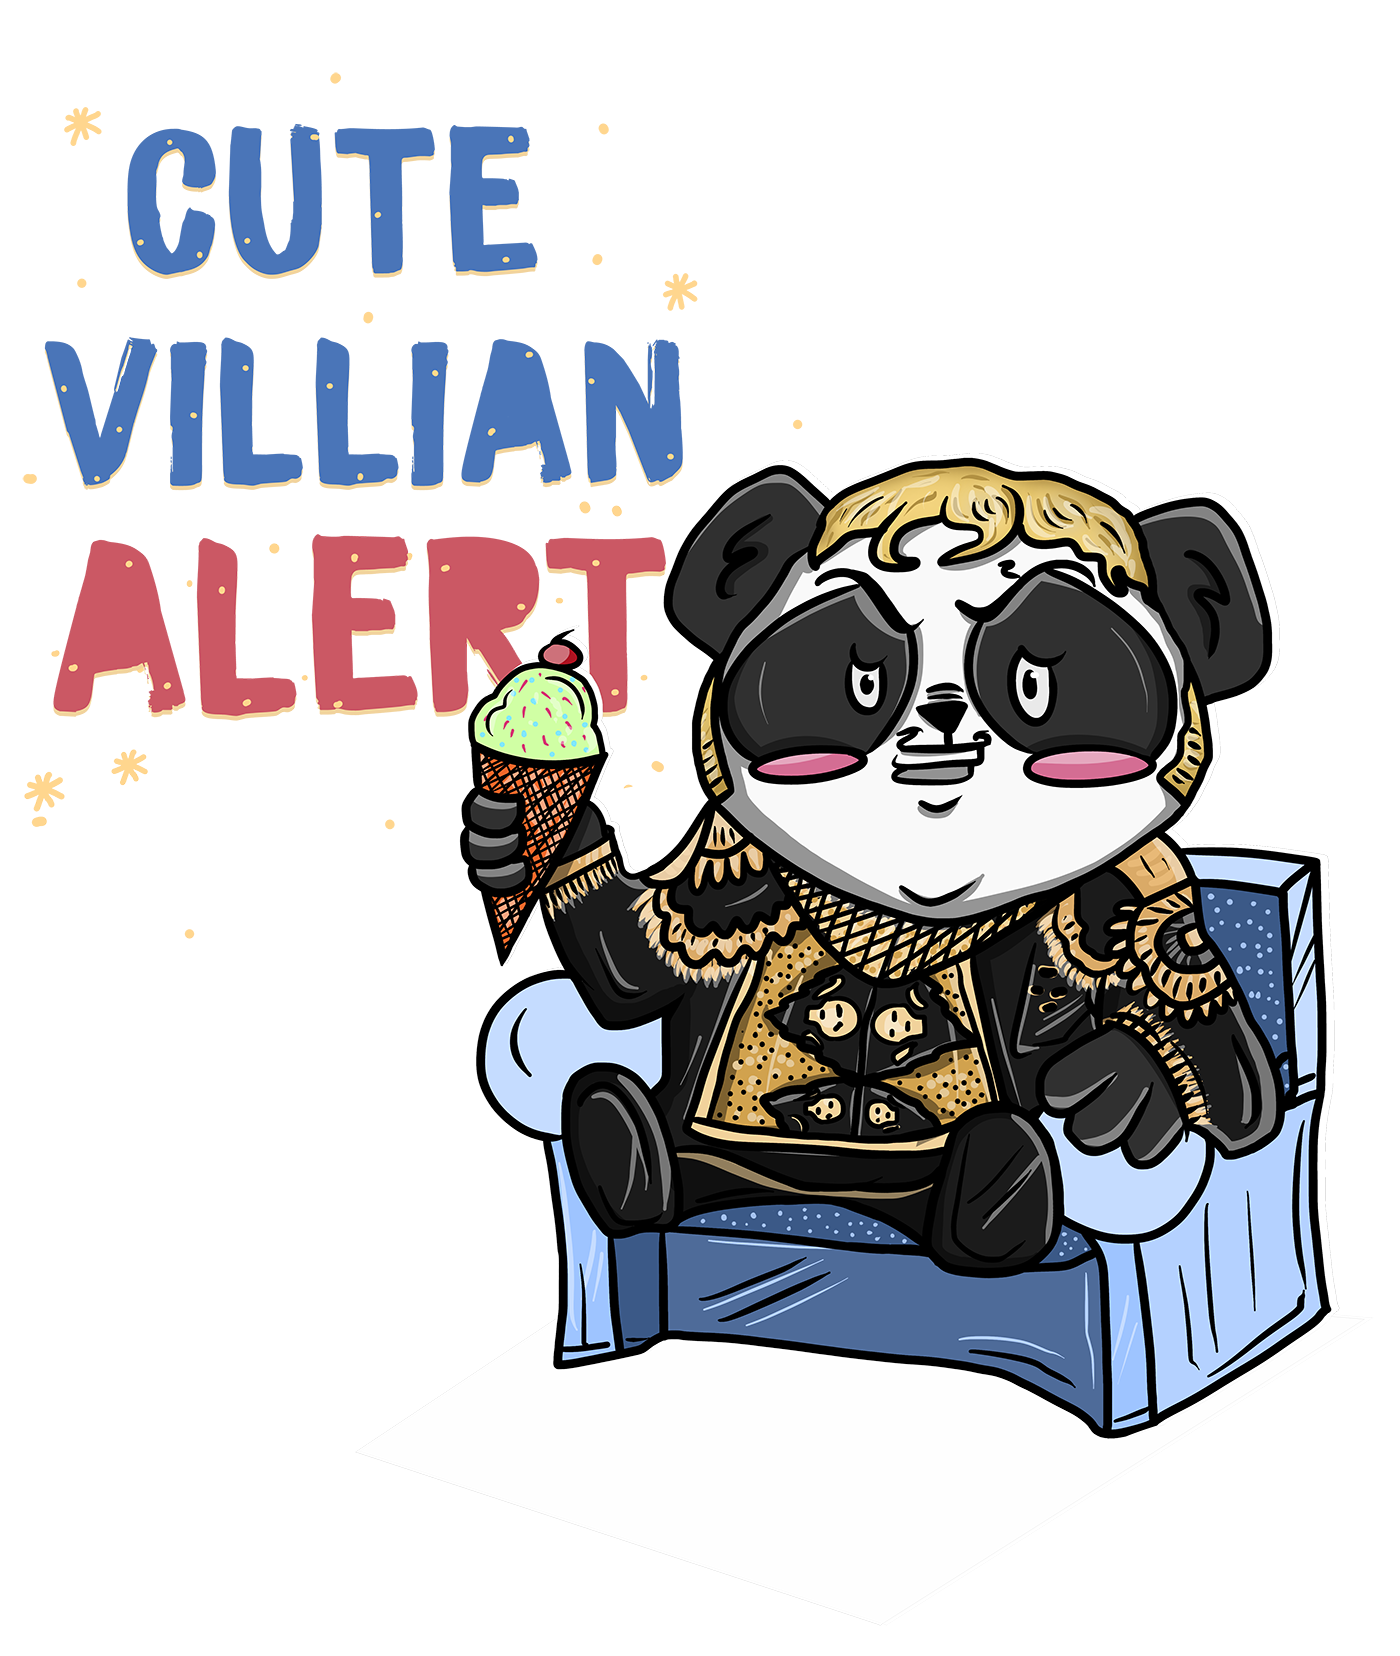 Cute Villian Alert - Oversized AF Edition